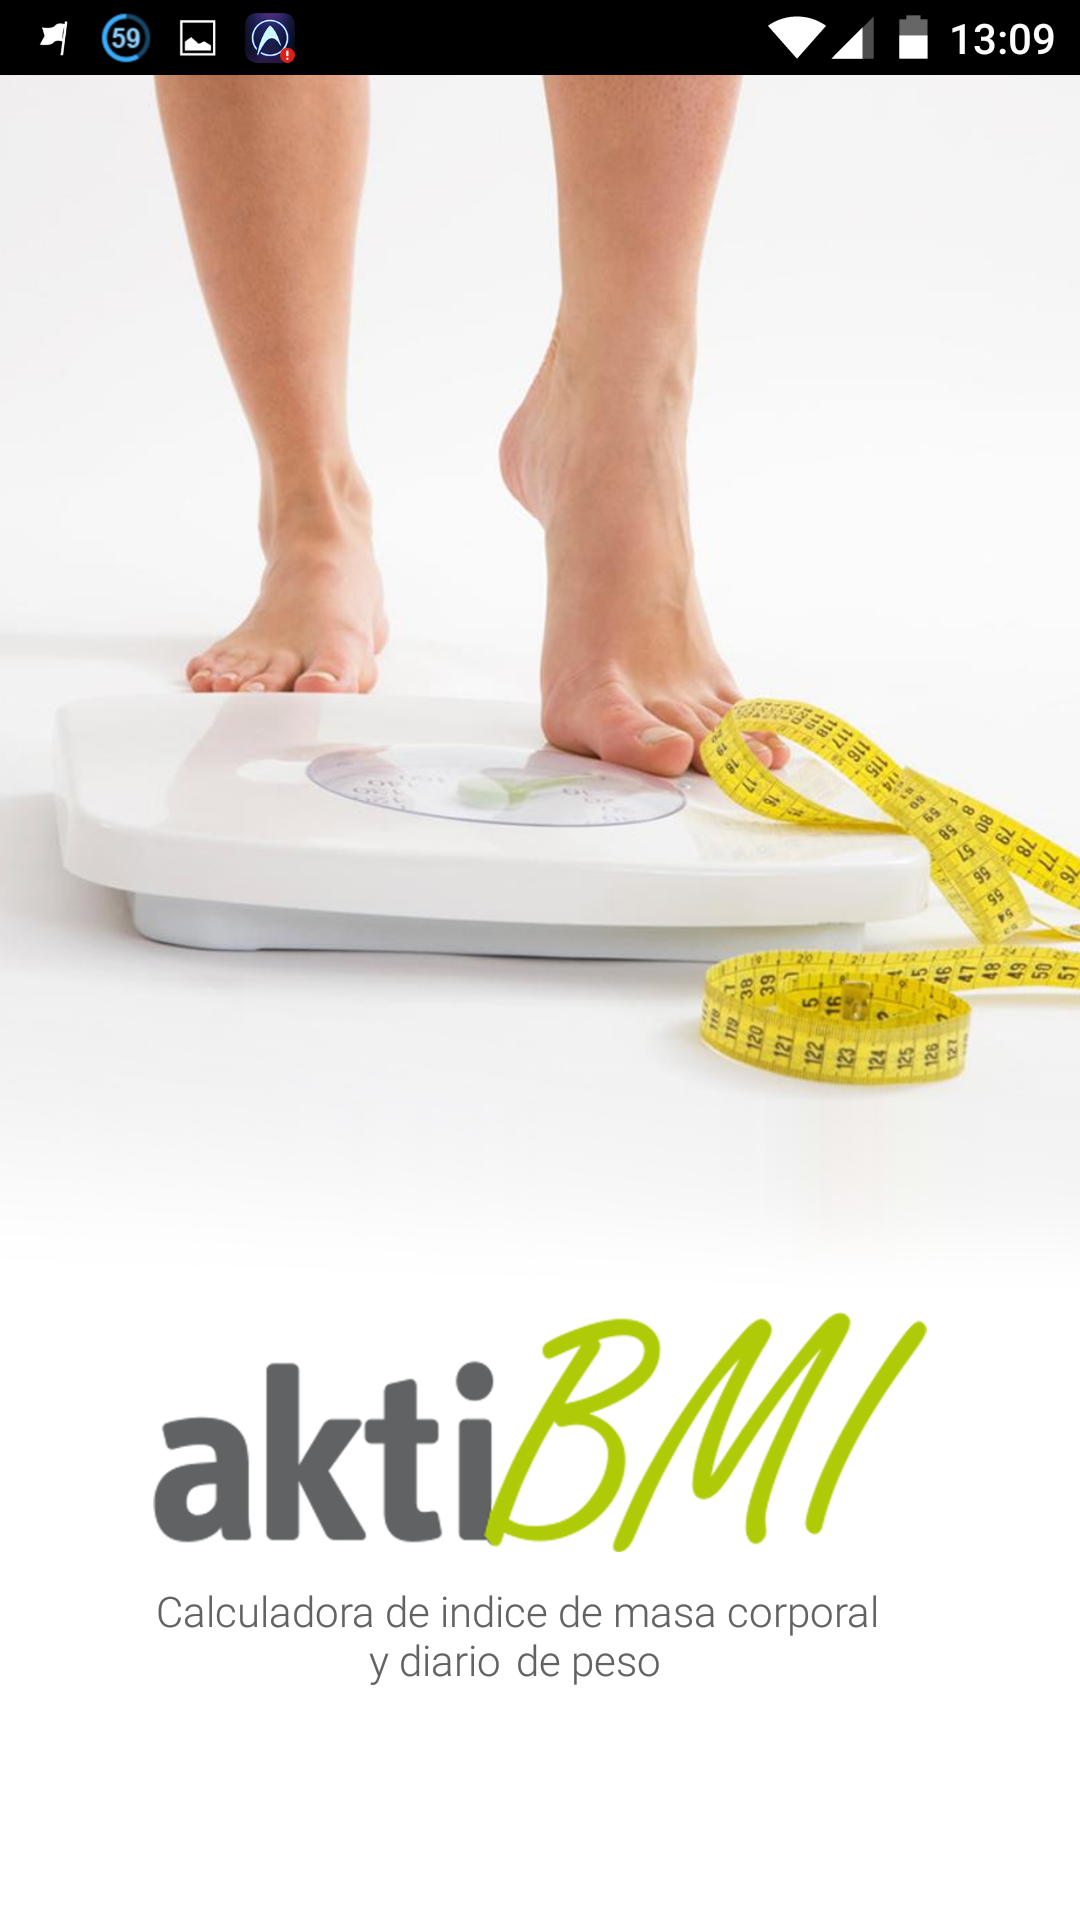 Android application Weight Loss Tracker & BMI - aktiBMI screenshort